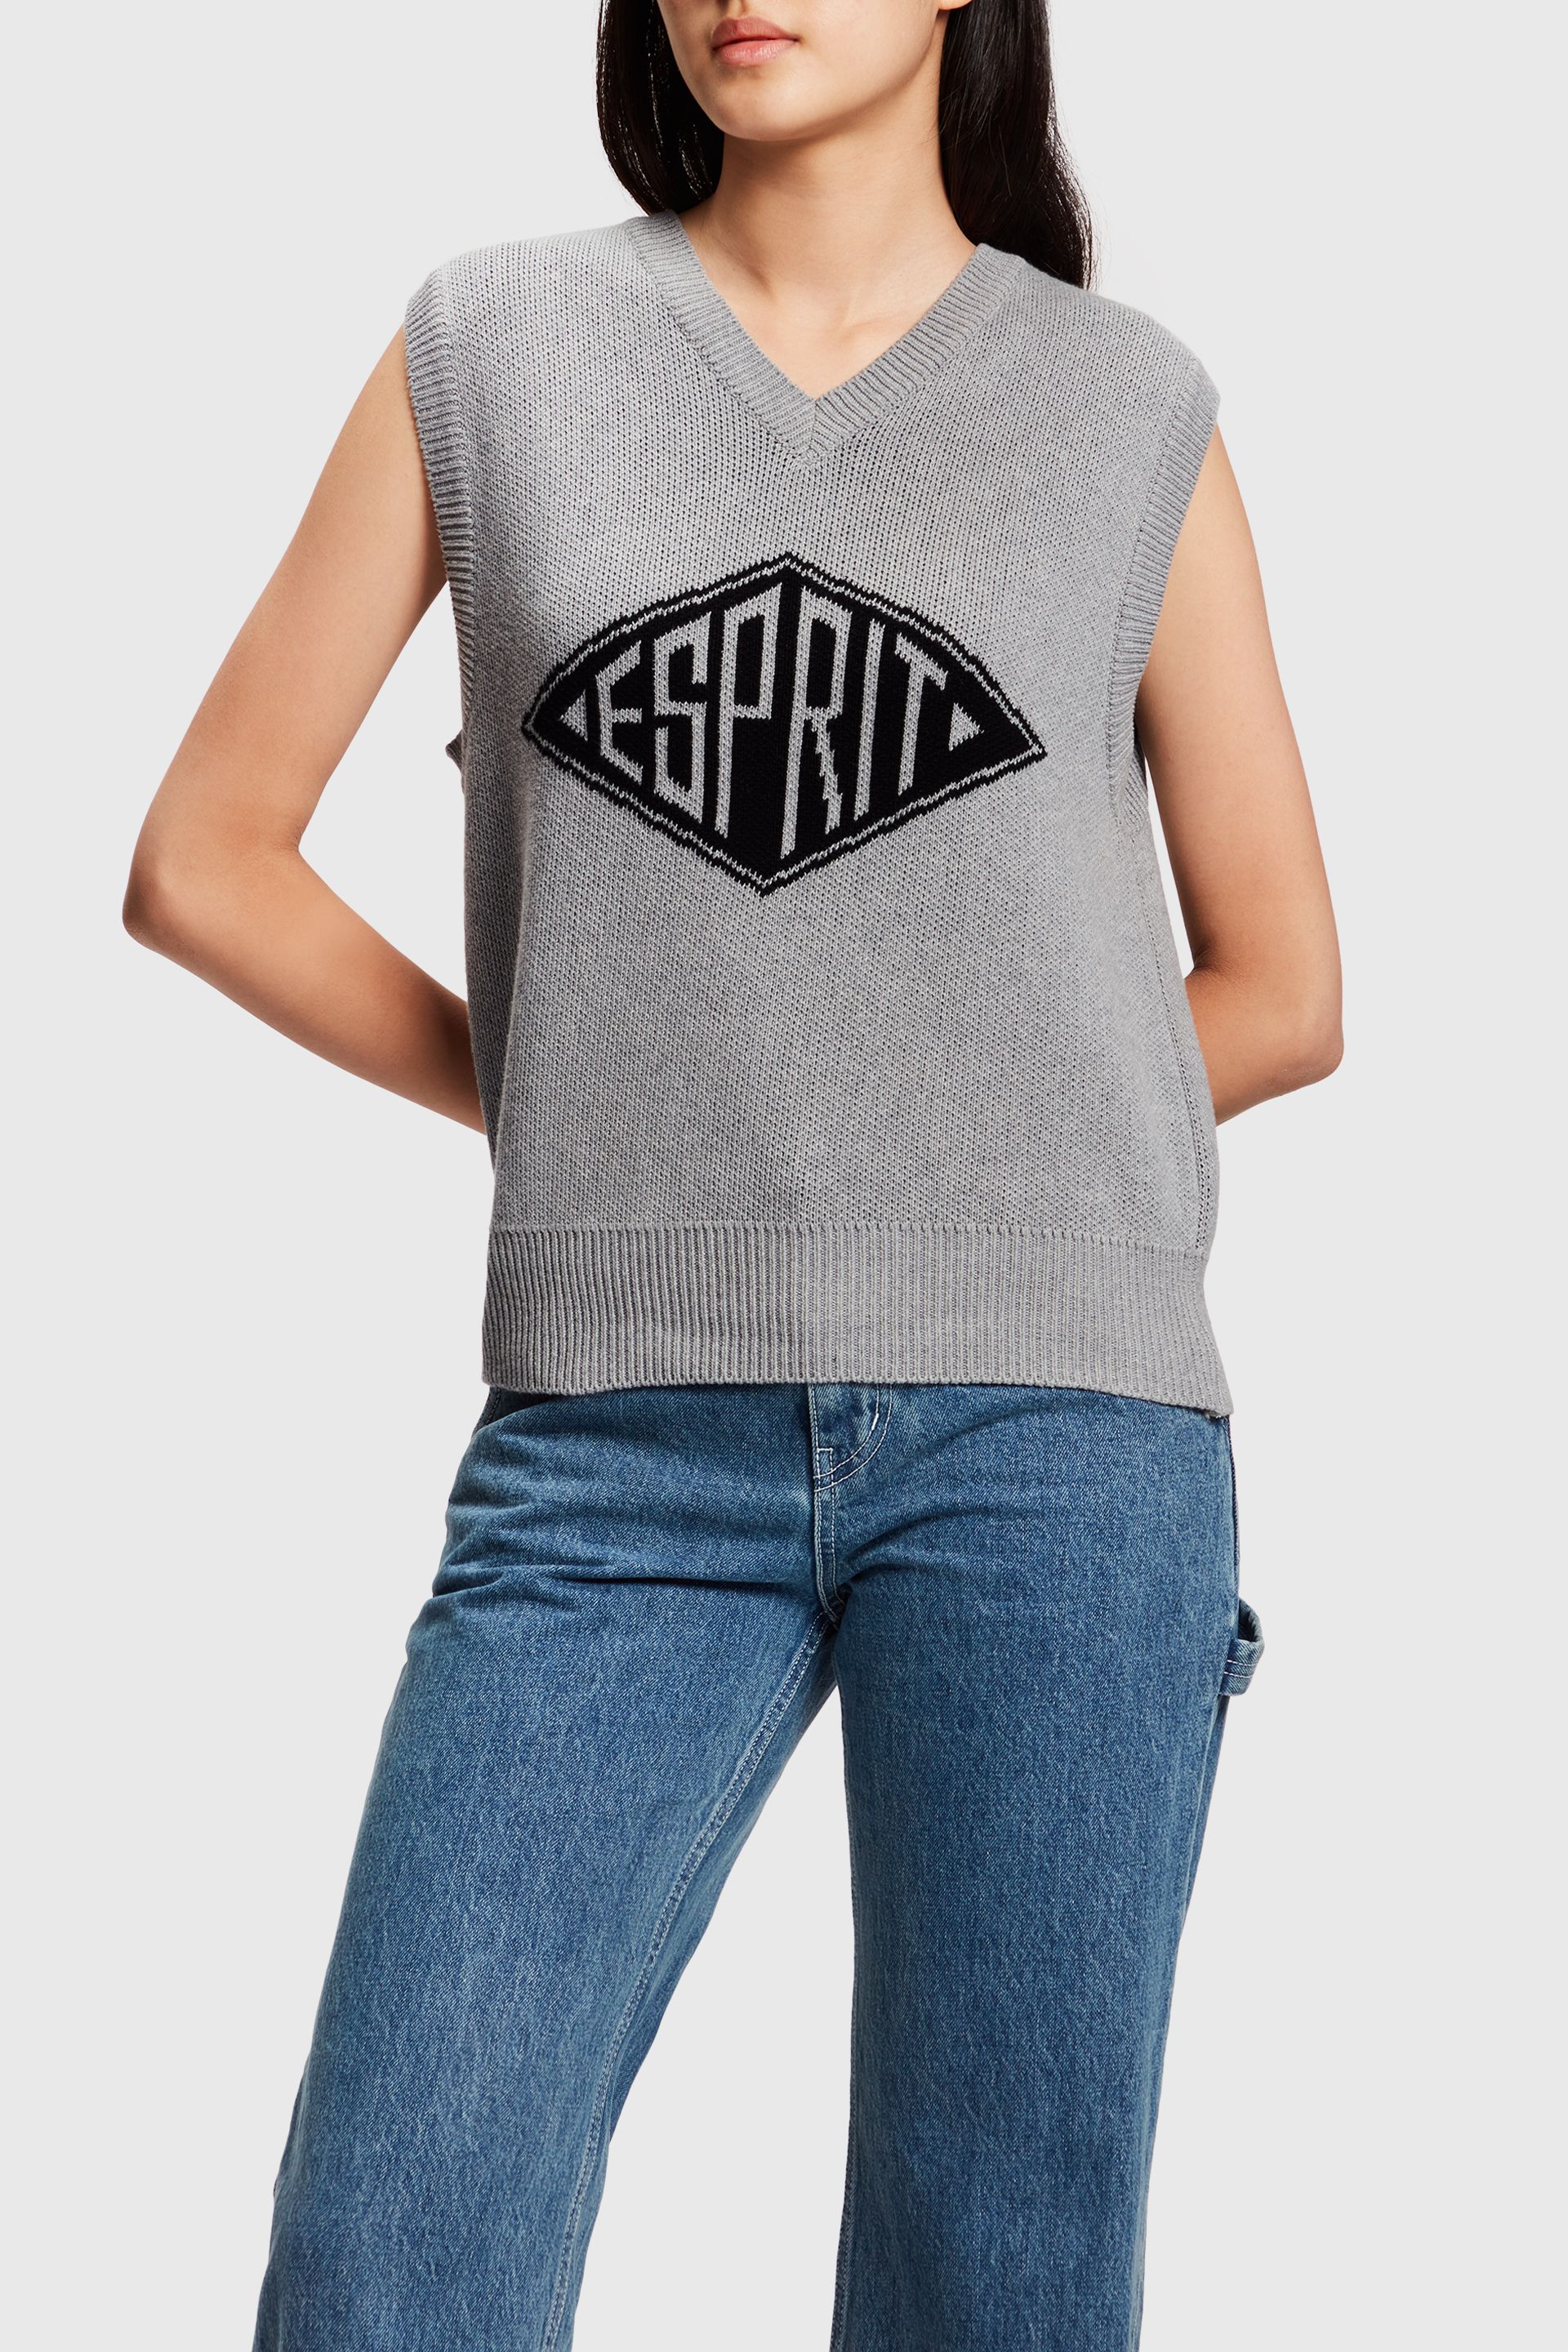 Of heilig Overtreffen ESPRIT x Rest & Recreation Capsule Knit Vest | Esprit Store